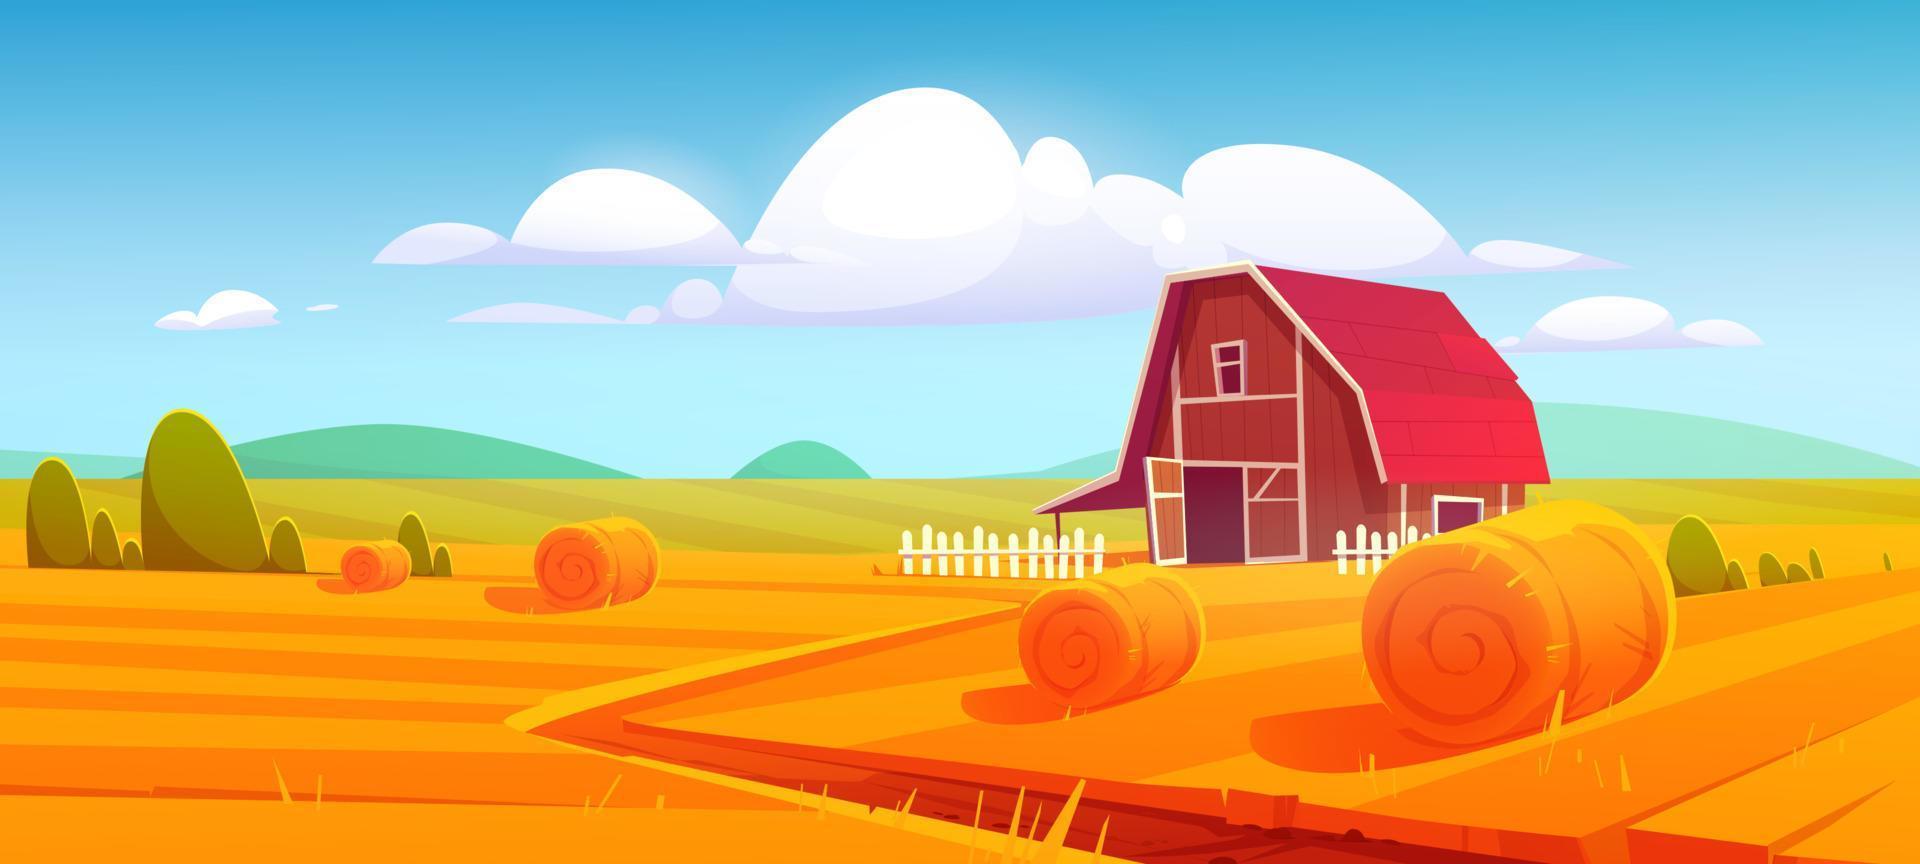 Barn on farm nature rural background vector